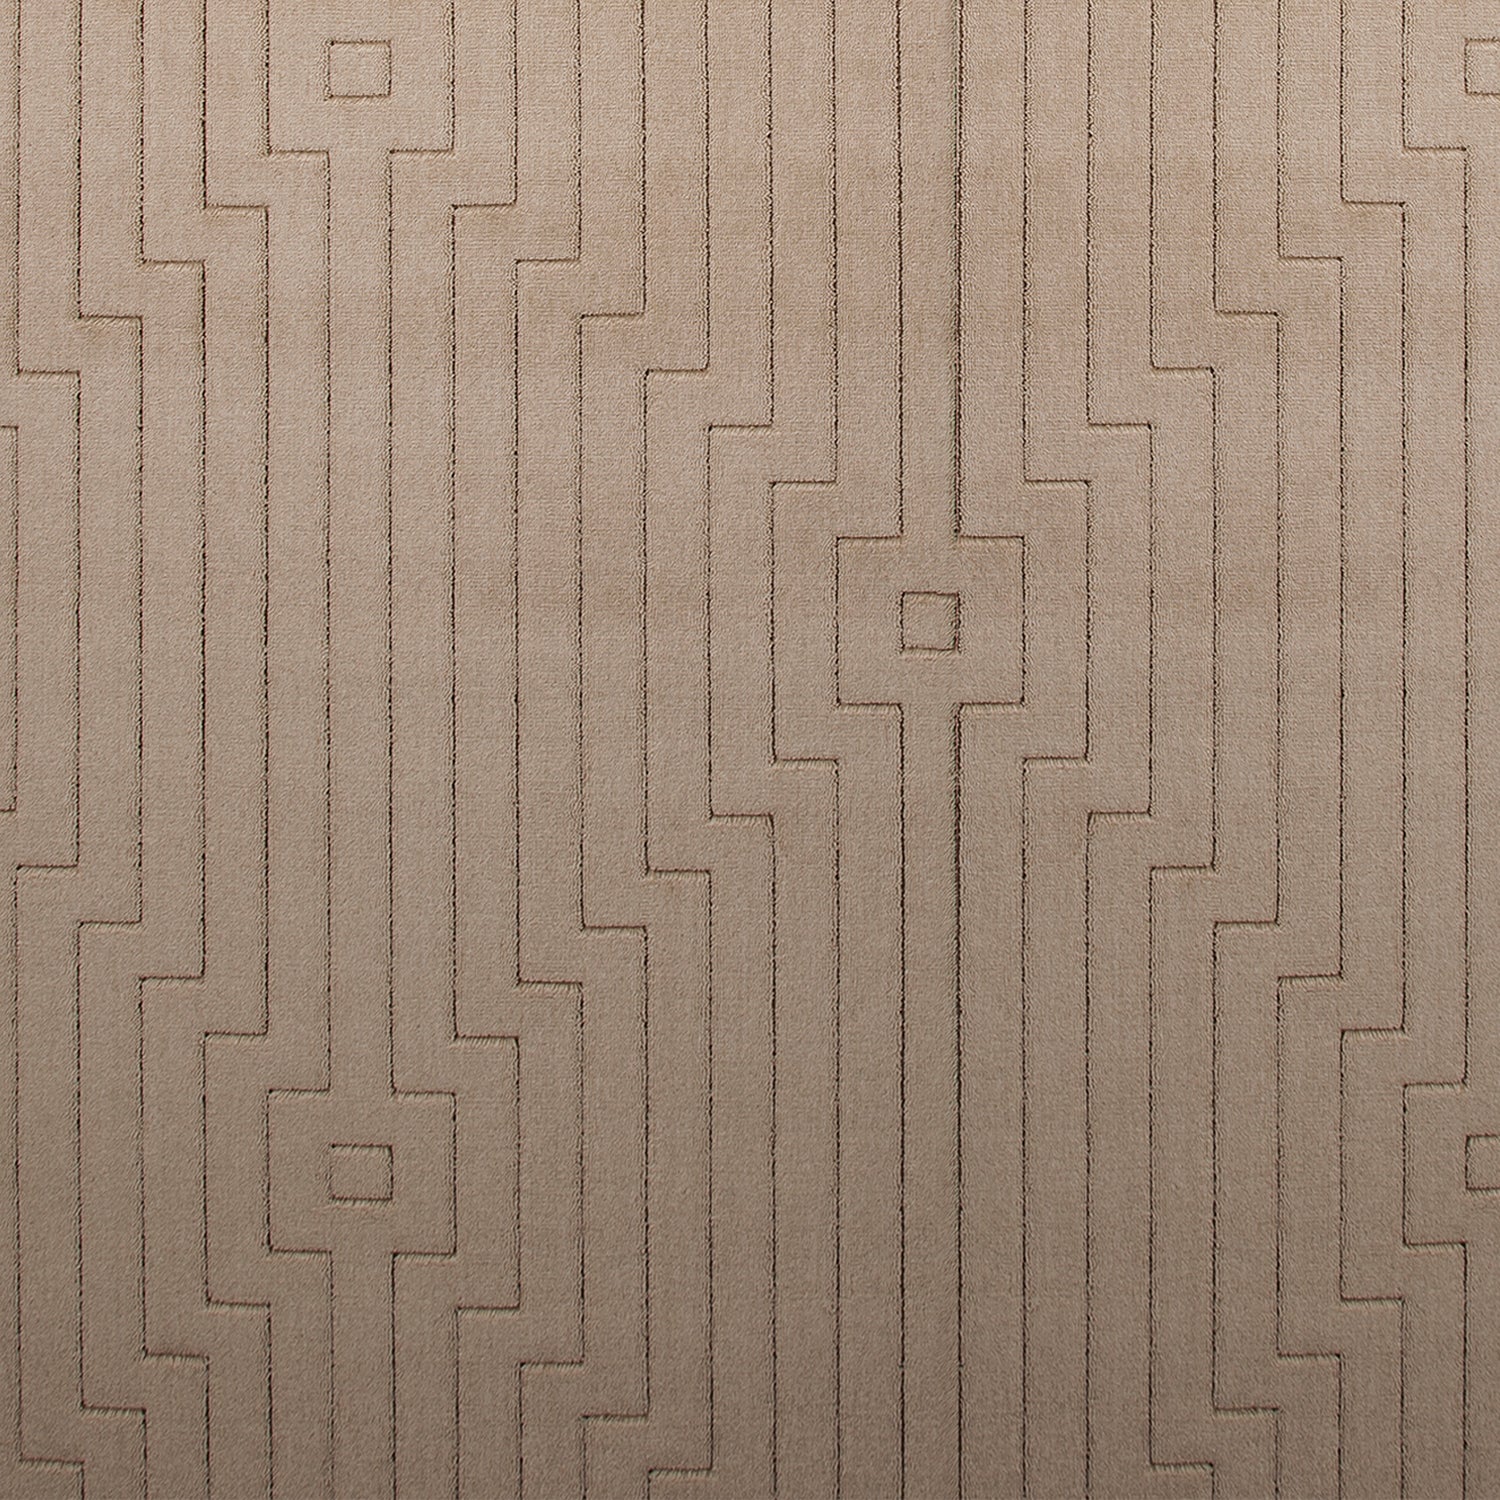 Wool-silk broadloom carpet swatch in a dimensional geometric weave in sable.